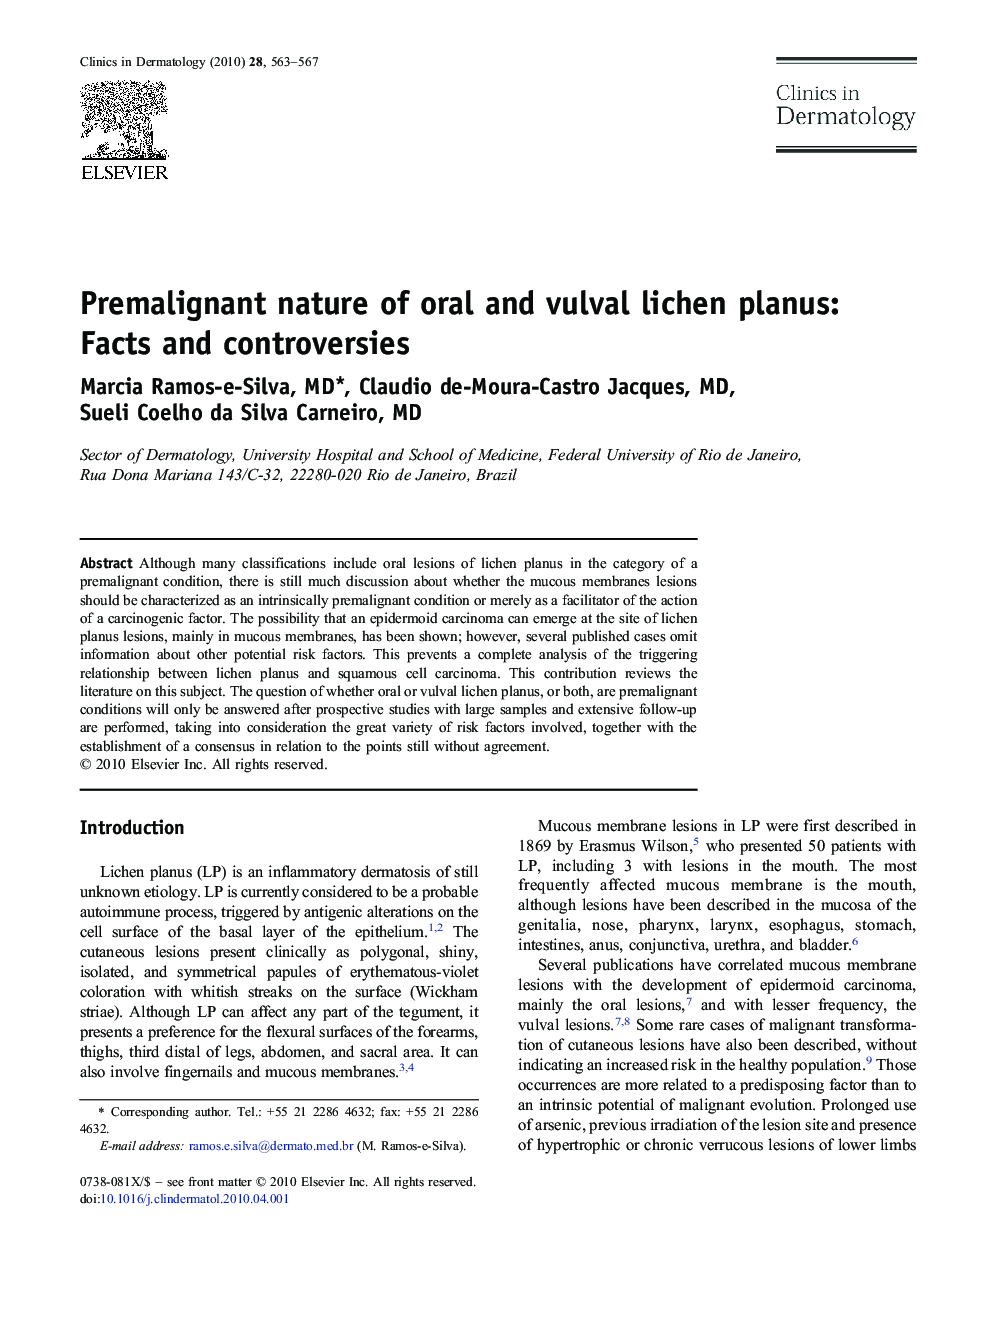 Premalignant nature of oral and vulval lichen planus: Facts and controversies